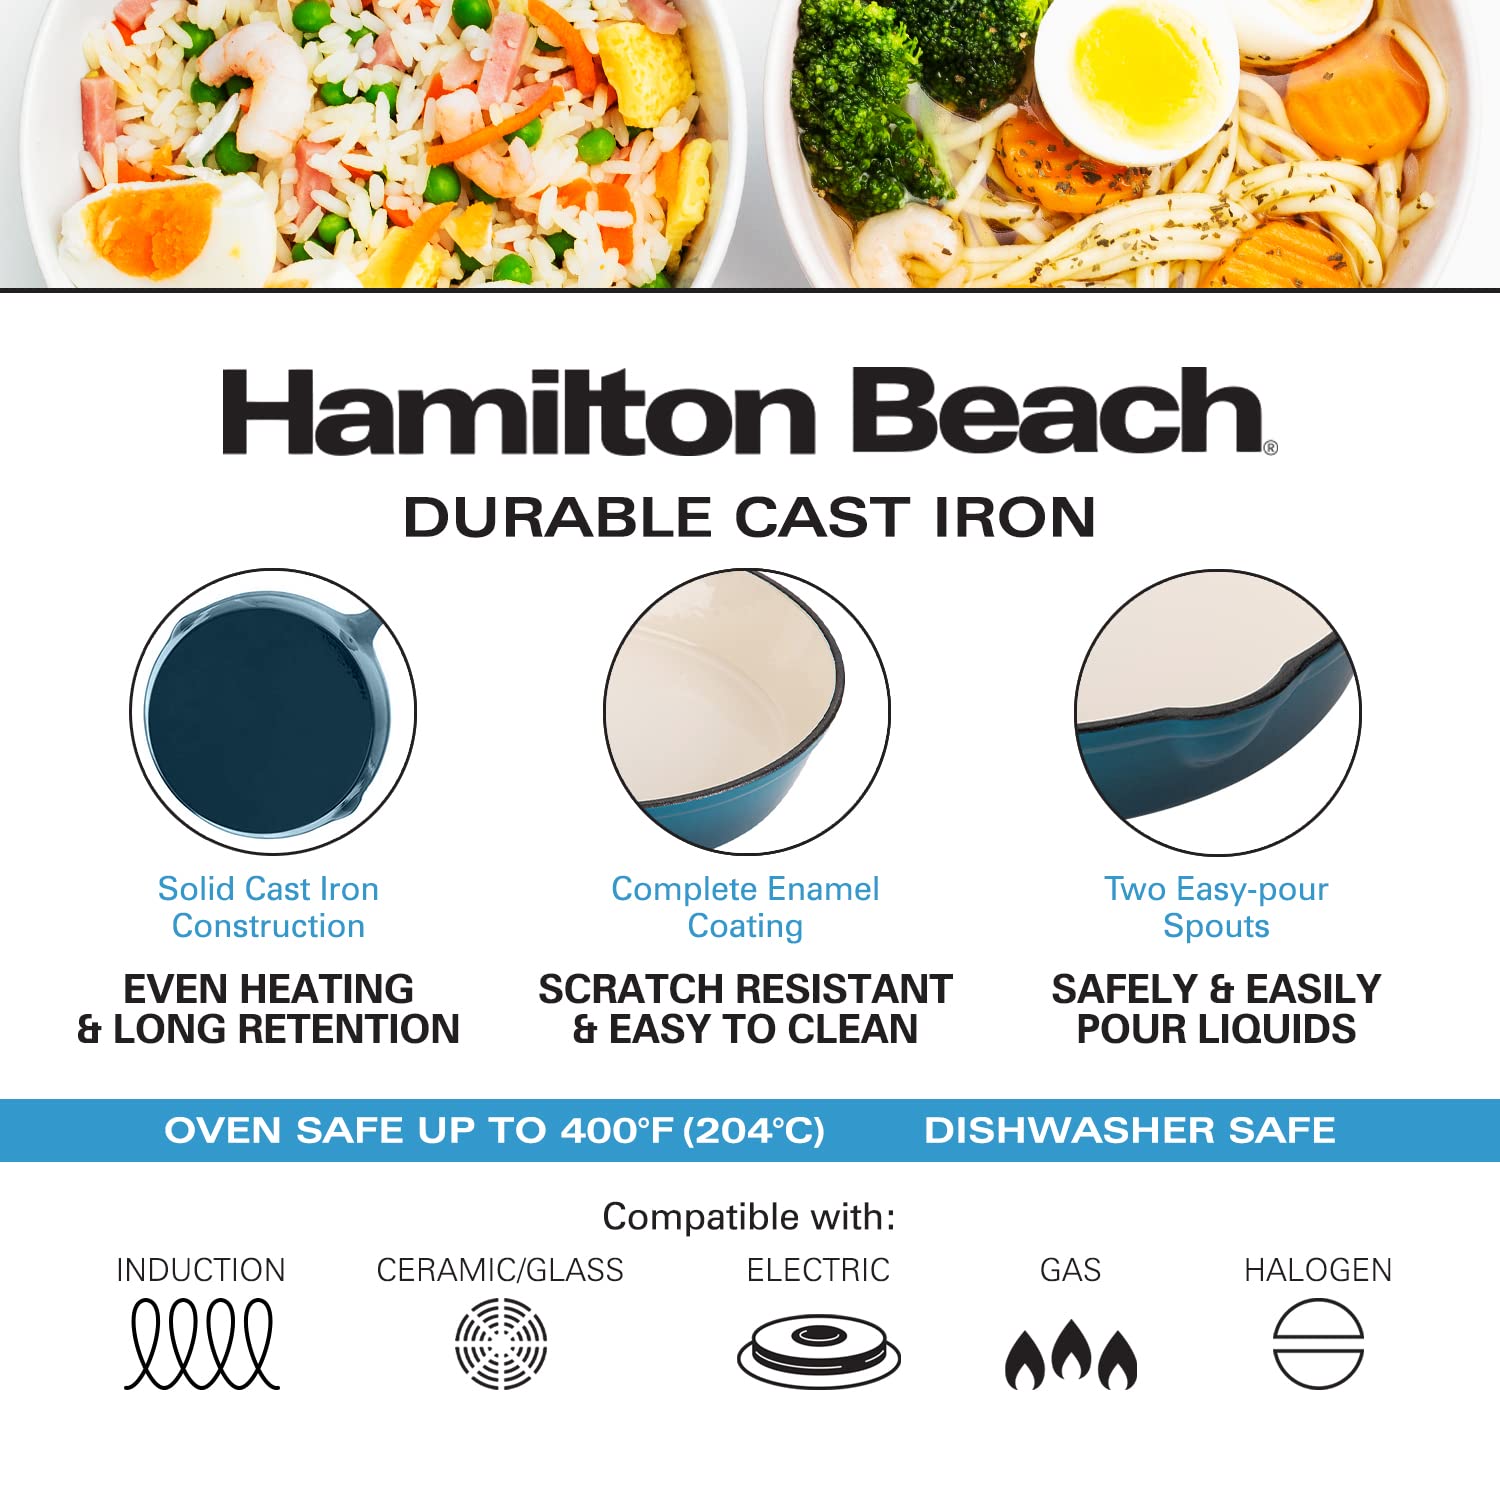 Hamilton Beach Enameled Cast Iron Fry Pan 8-Inch Navy, Cream Enamel co